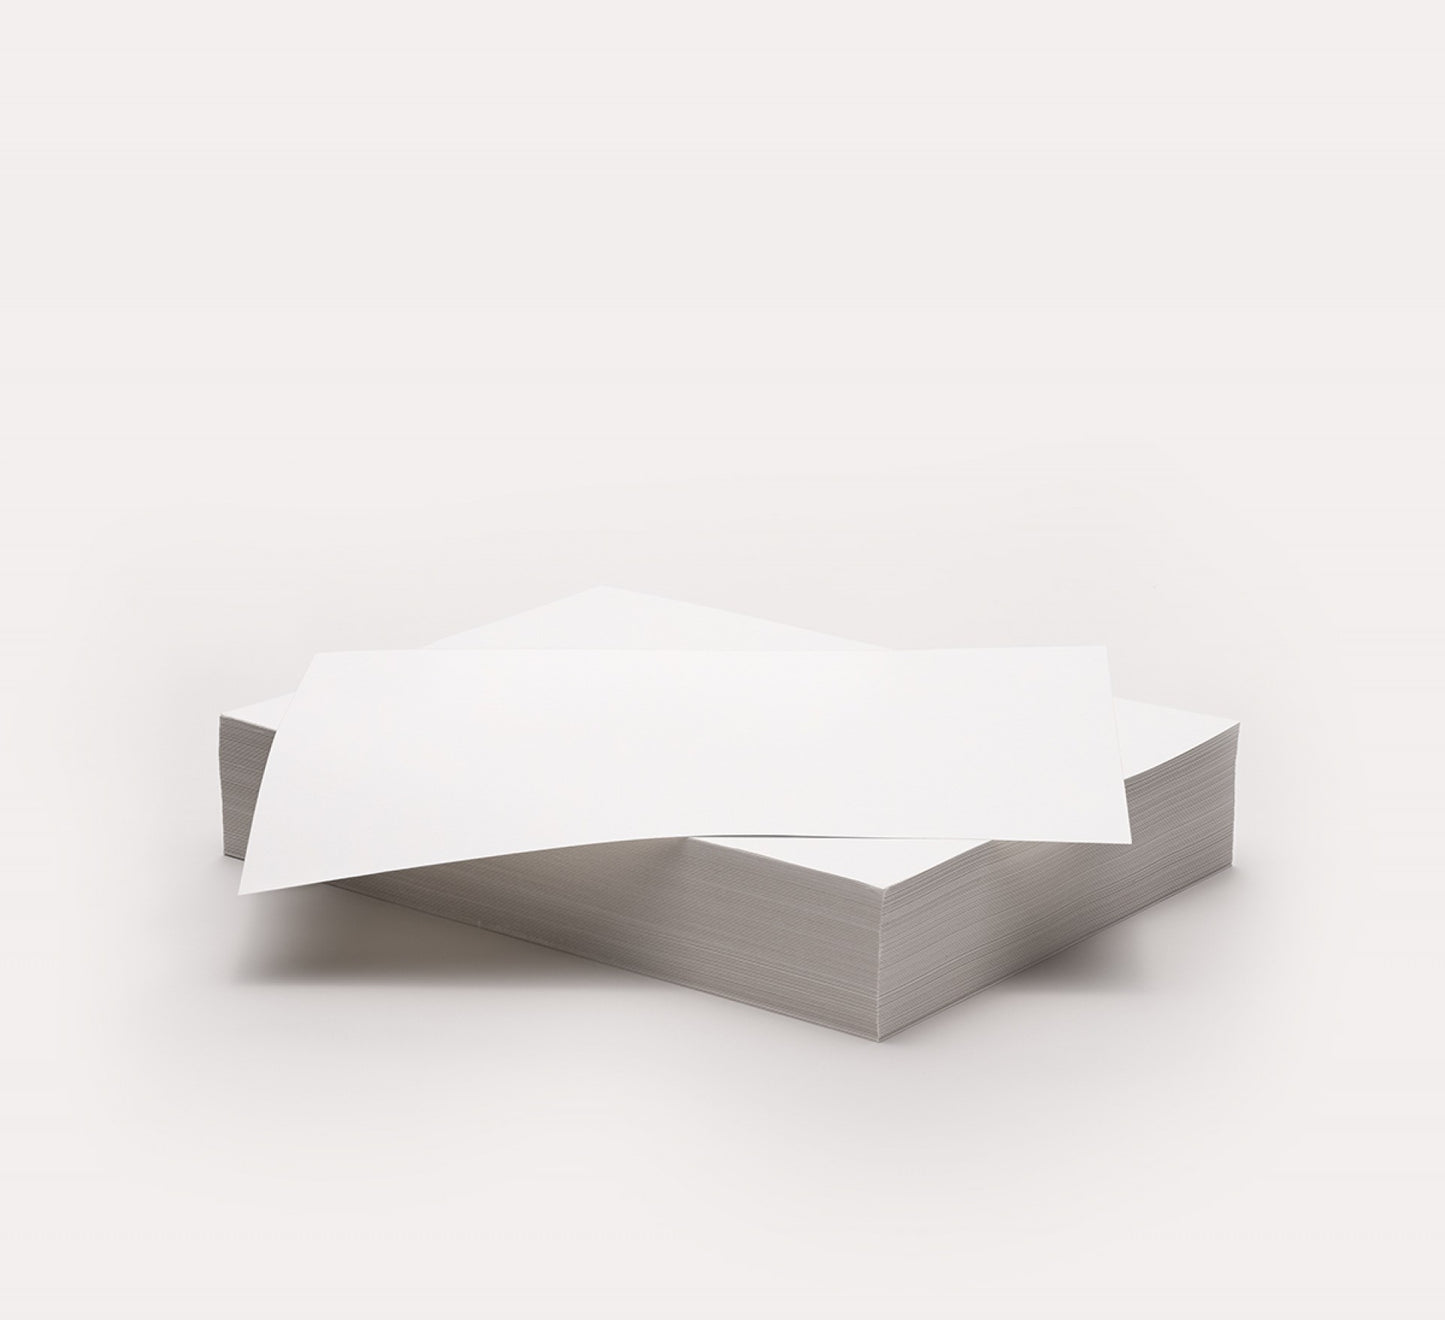 Kopierpapier Steinbeis No1 Classic White - 2500 Blatt DIN A4 80g/m2 100% Recycled